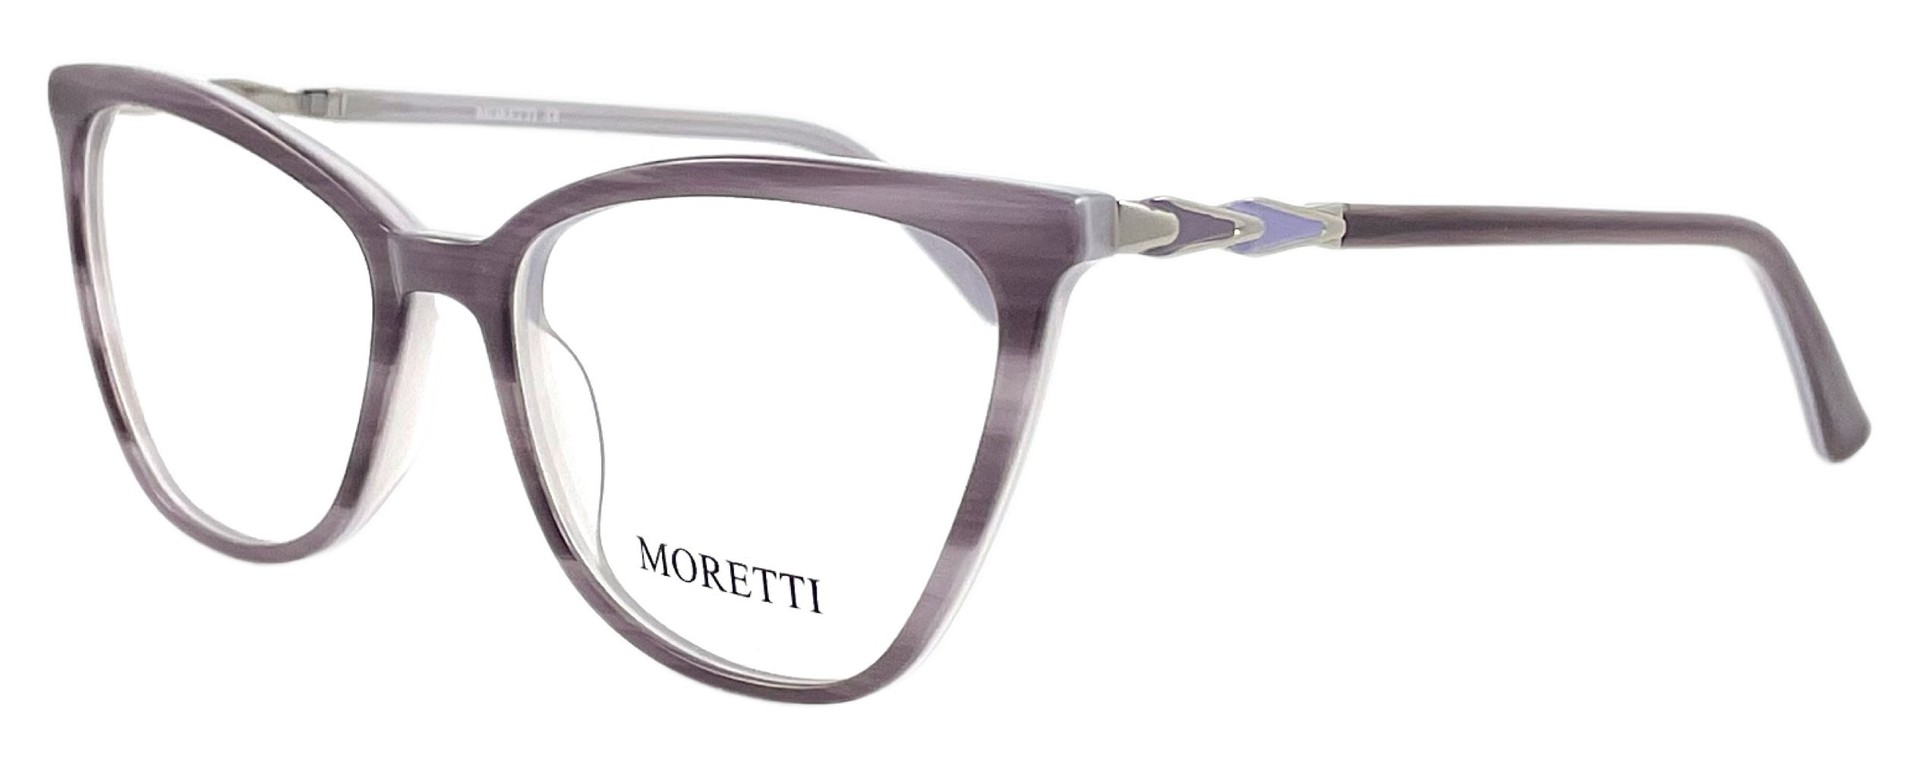 Moretti MG6059 C4 2